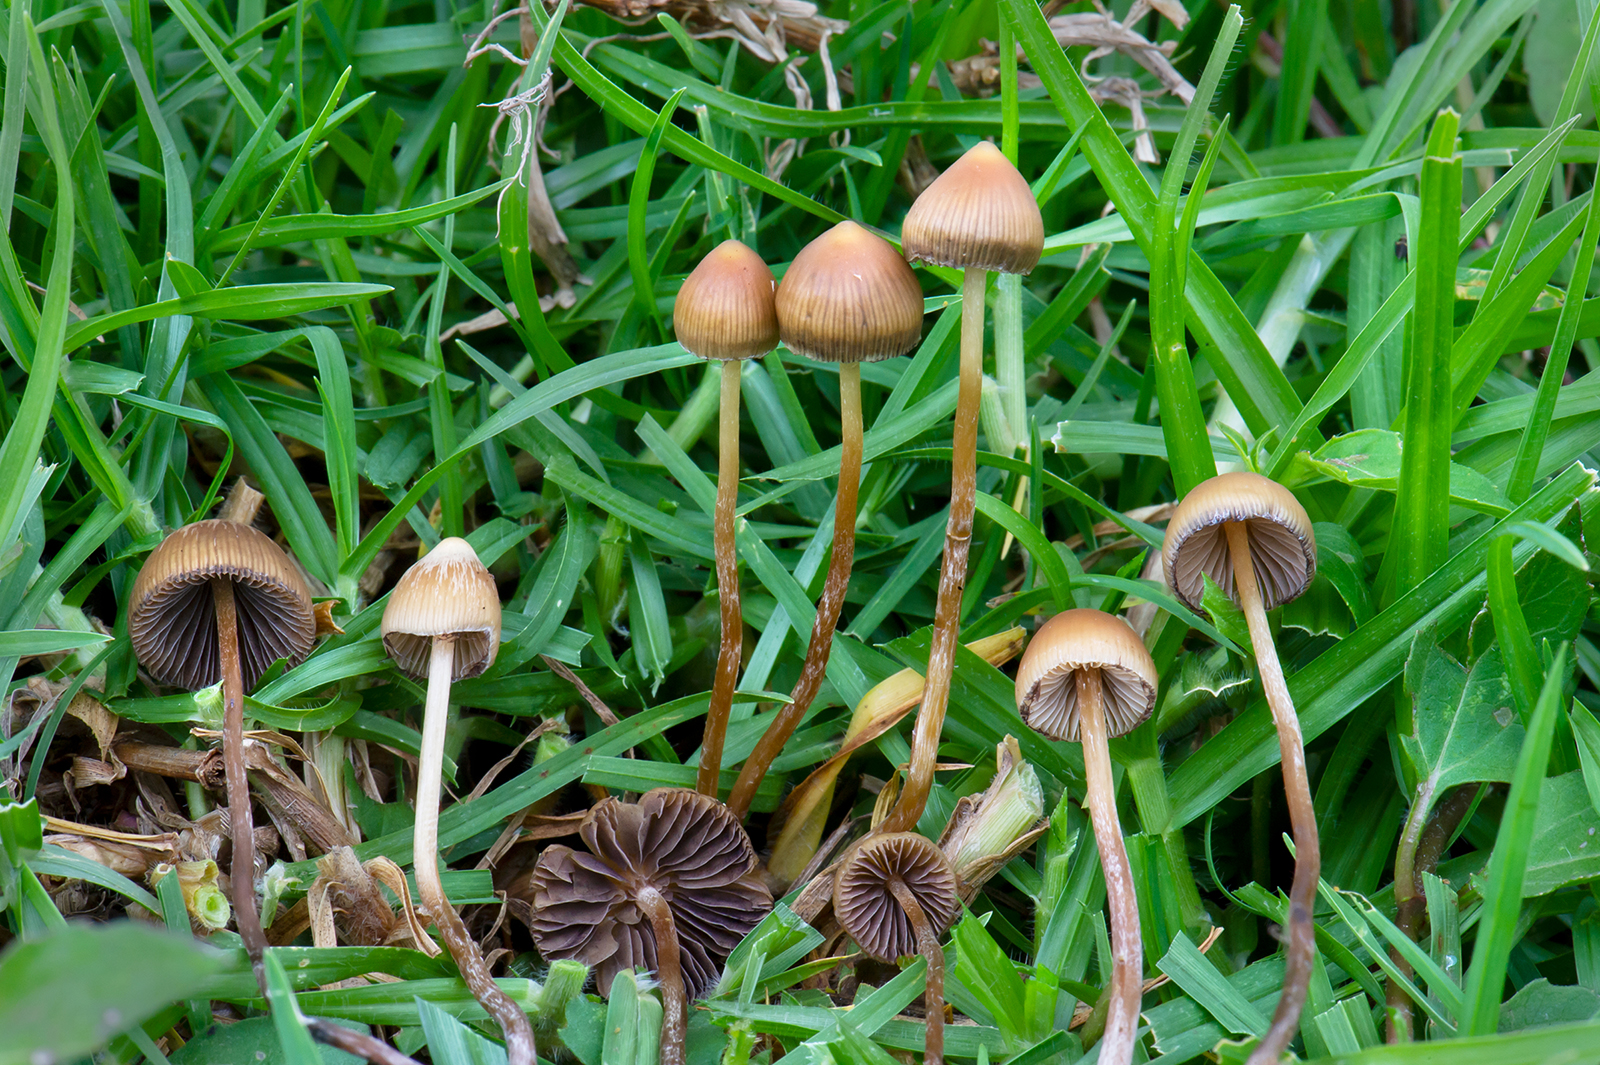 Psilocybe mexicana mushrooms in Veracruz, Mexico, on July 2, 2019. Photo by Alan Rockefeller/Wikipedia/Creative Commons